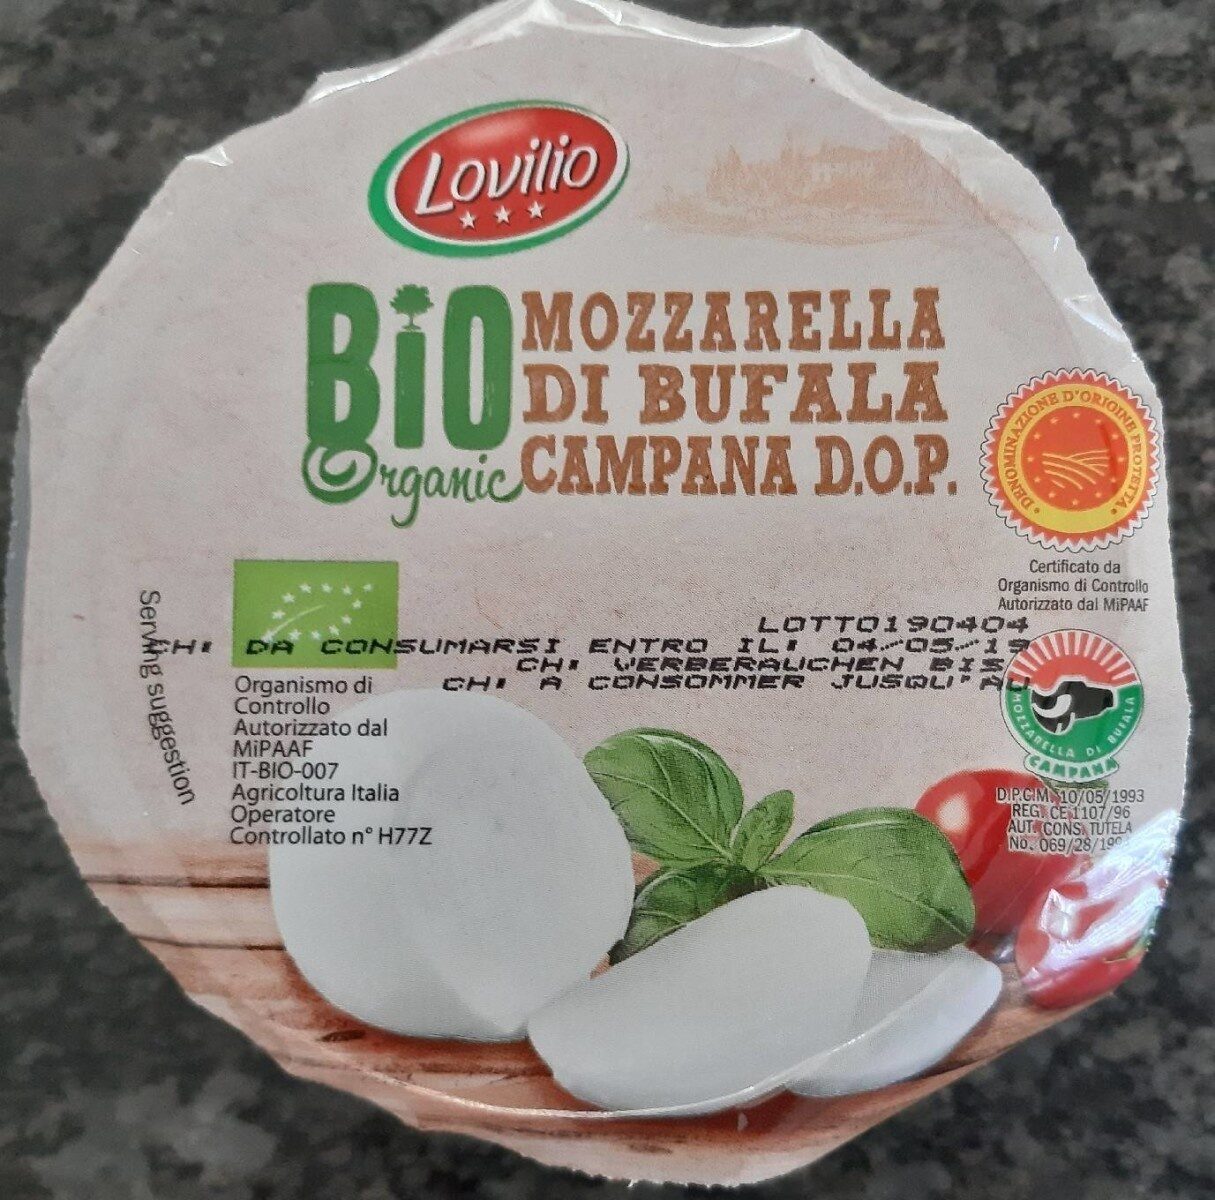 Mozzarella di bufala campana - Product - fr